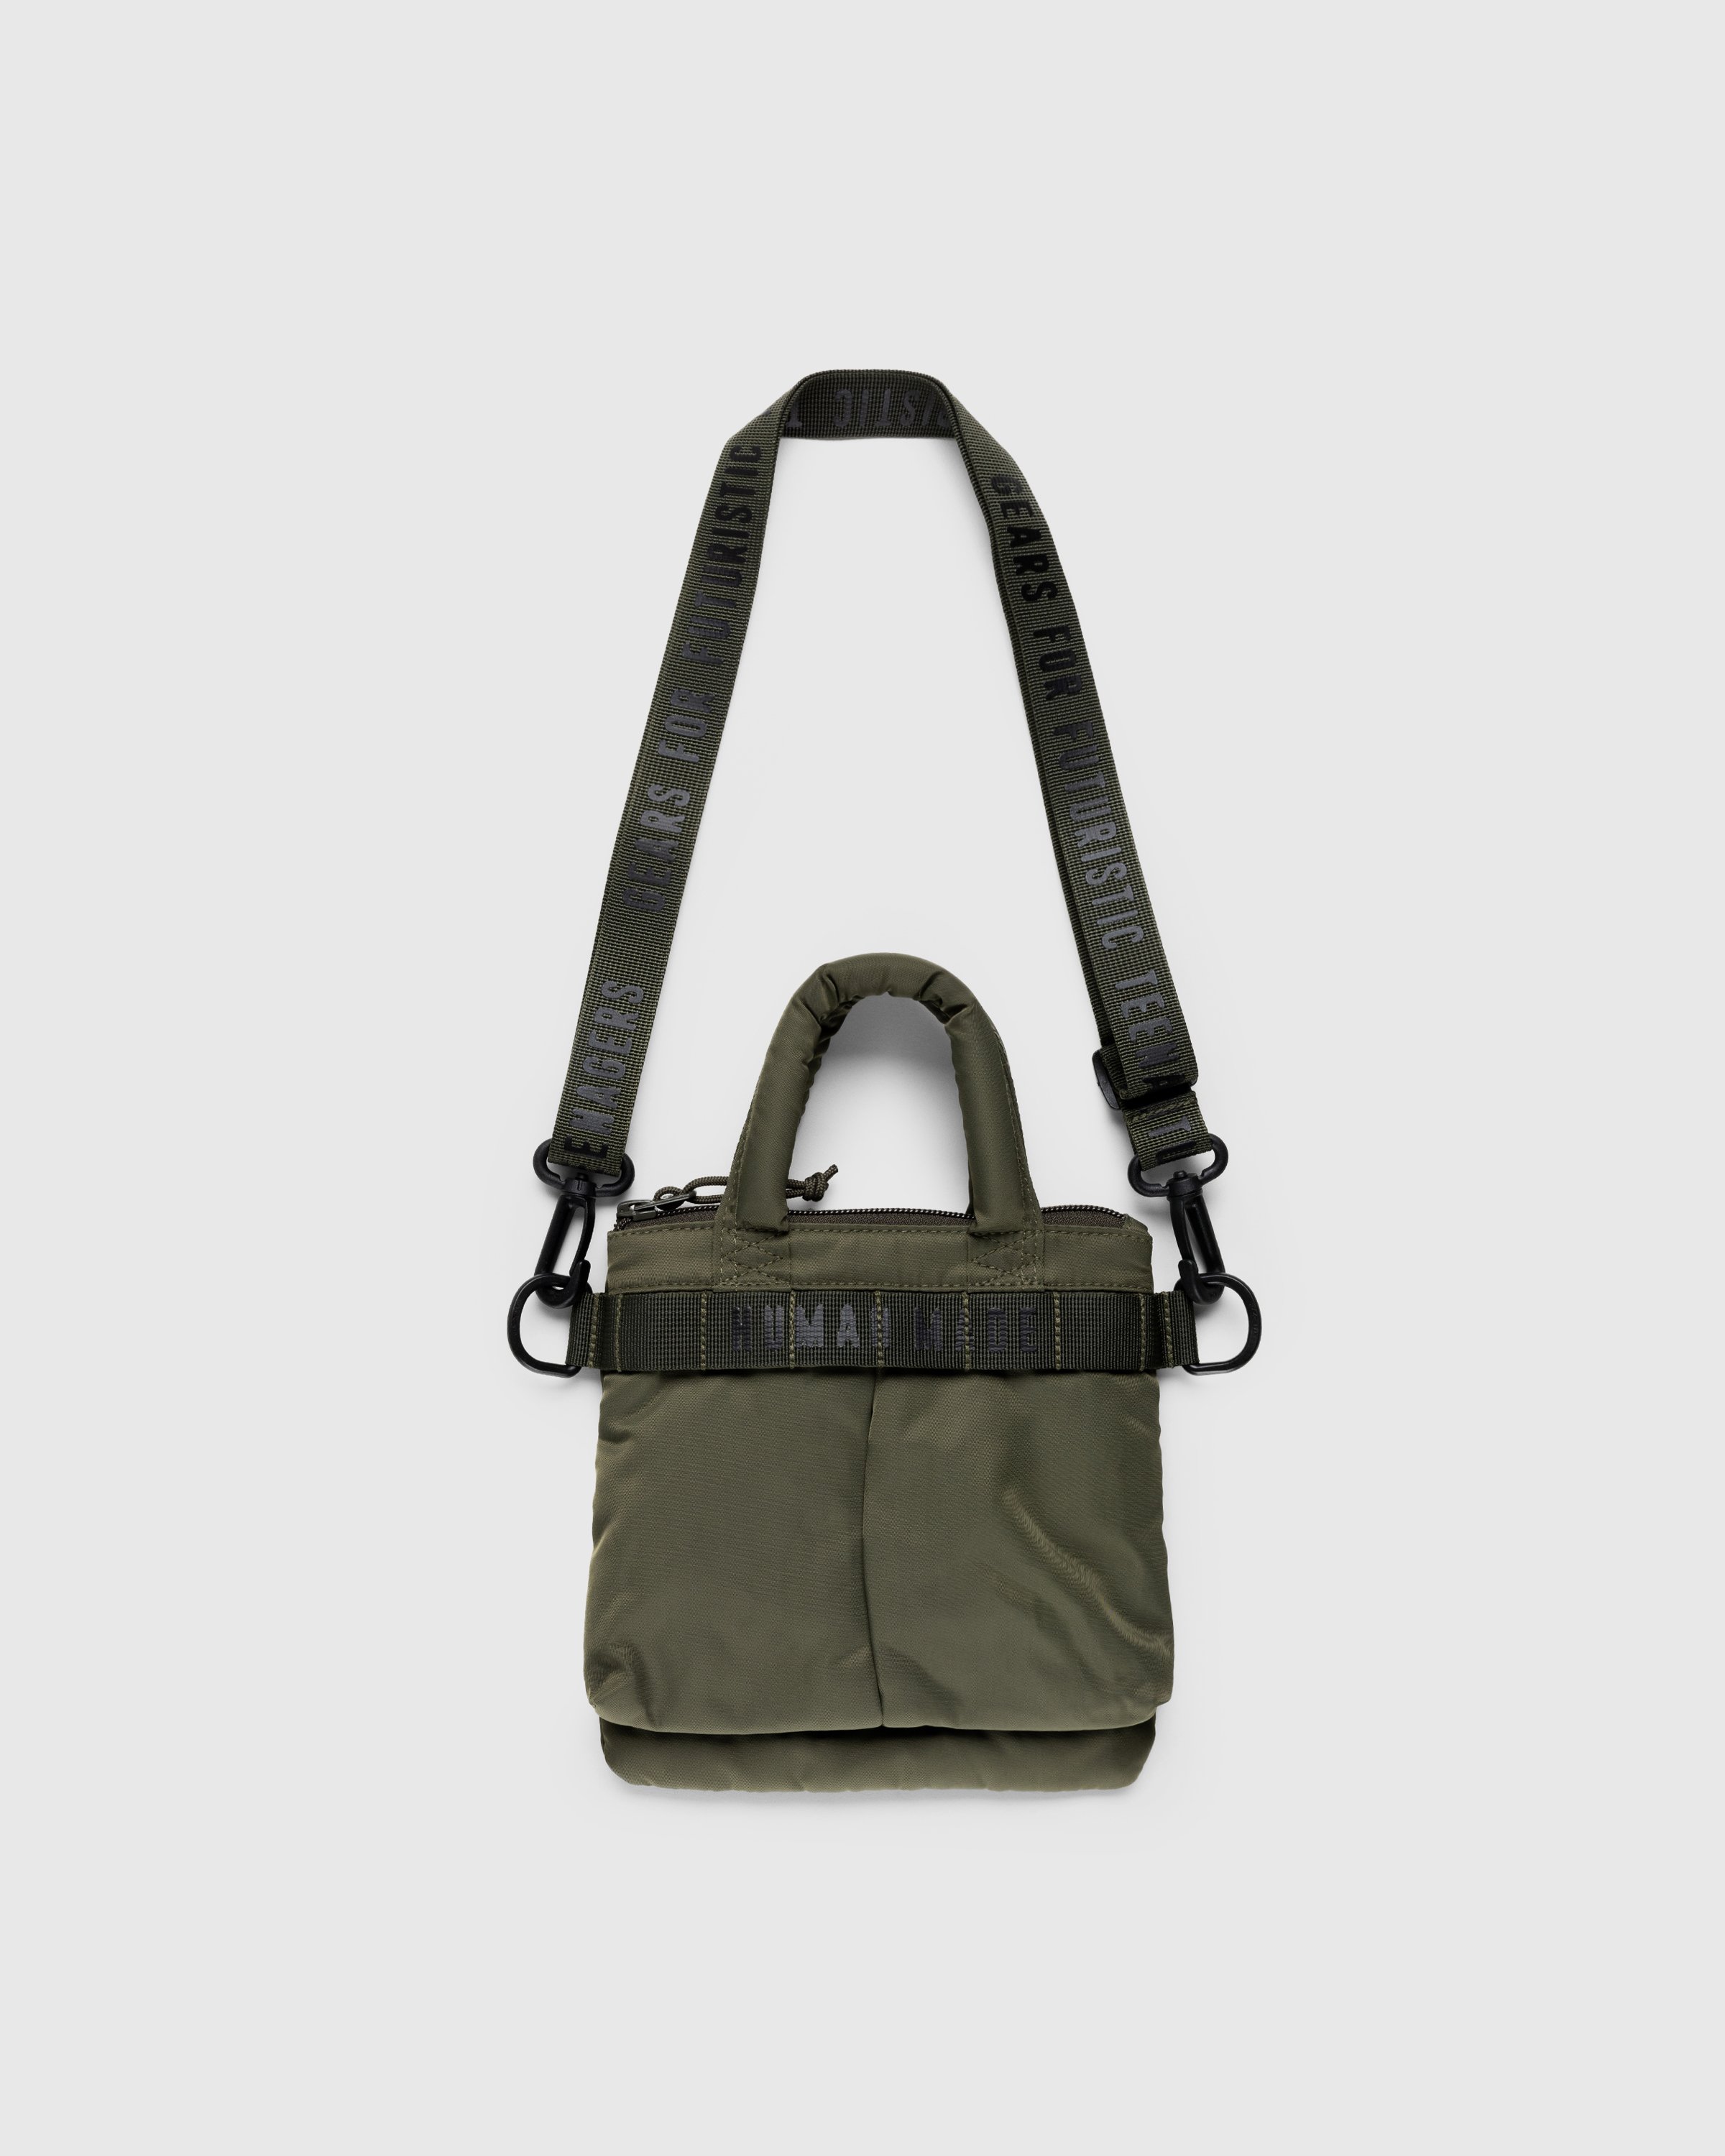 Human Made - MINI HELMET BAG Olive Drab - Accessories - Green - Image 1